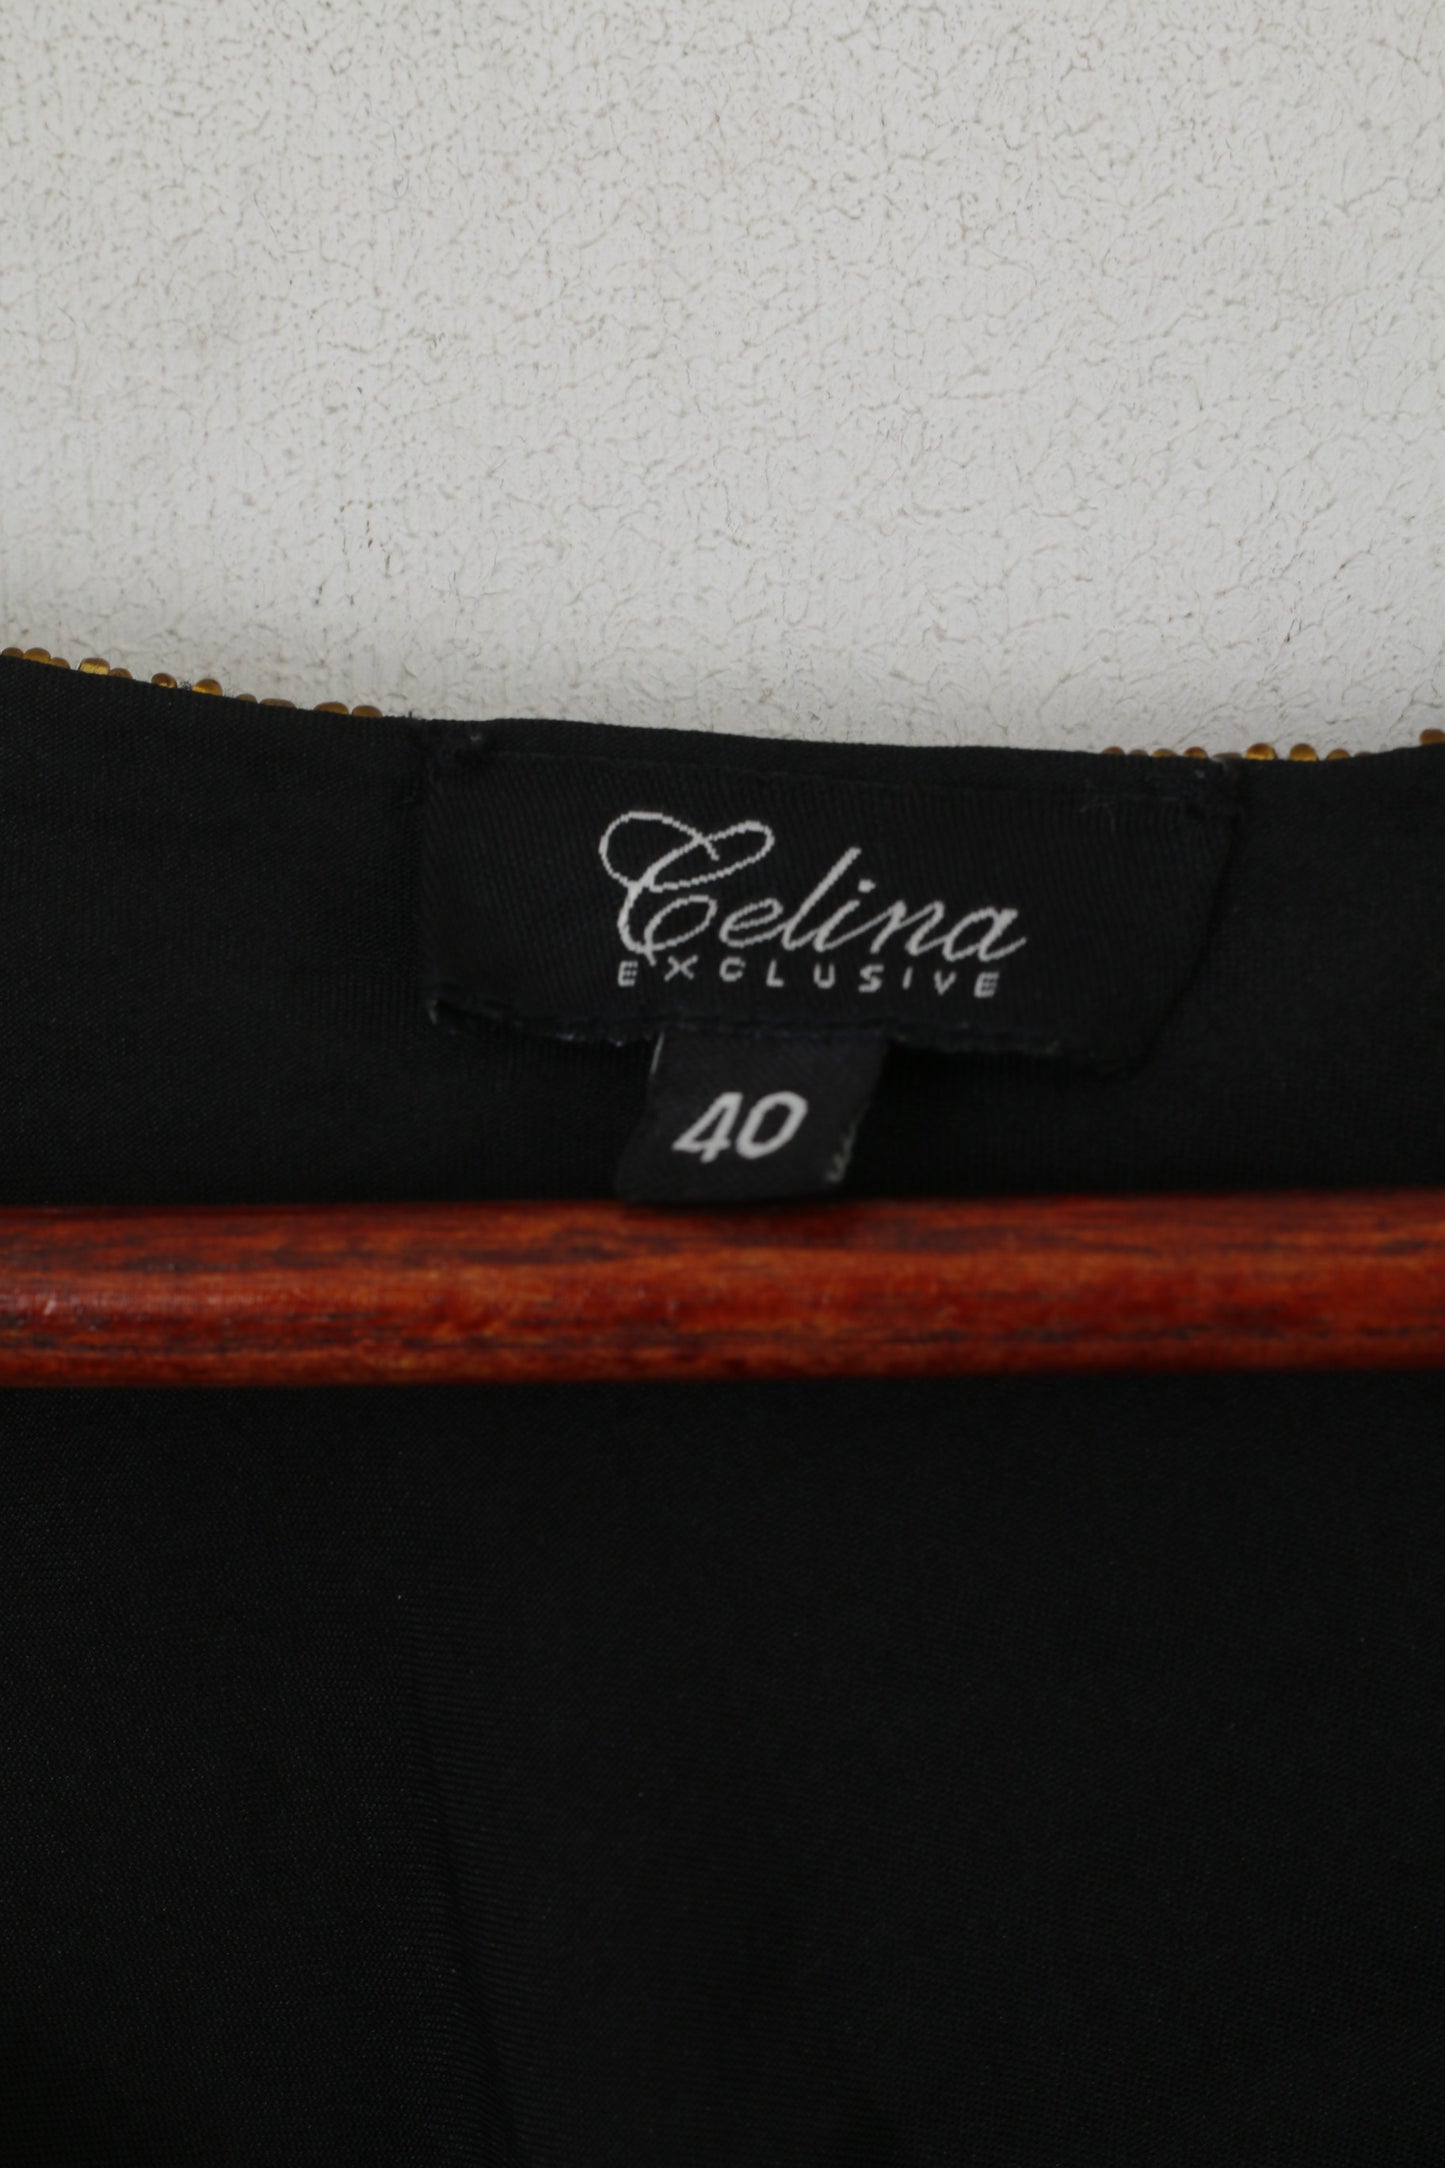 Celina Exclusive Women 40 M Shirt Black Floral Beads Shiny Elegant Tank Top